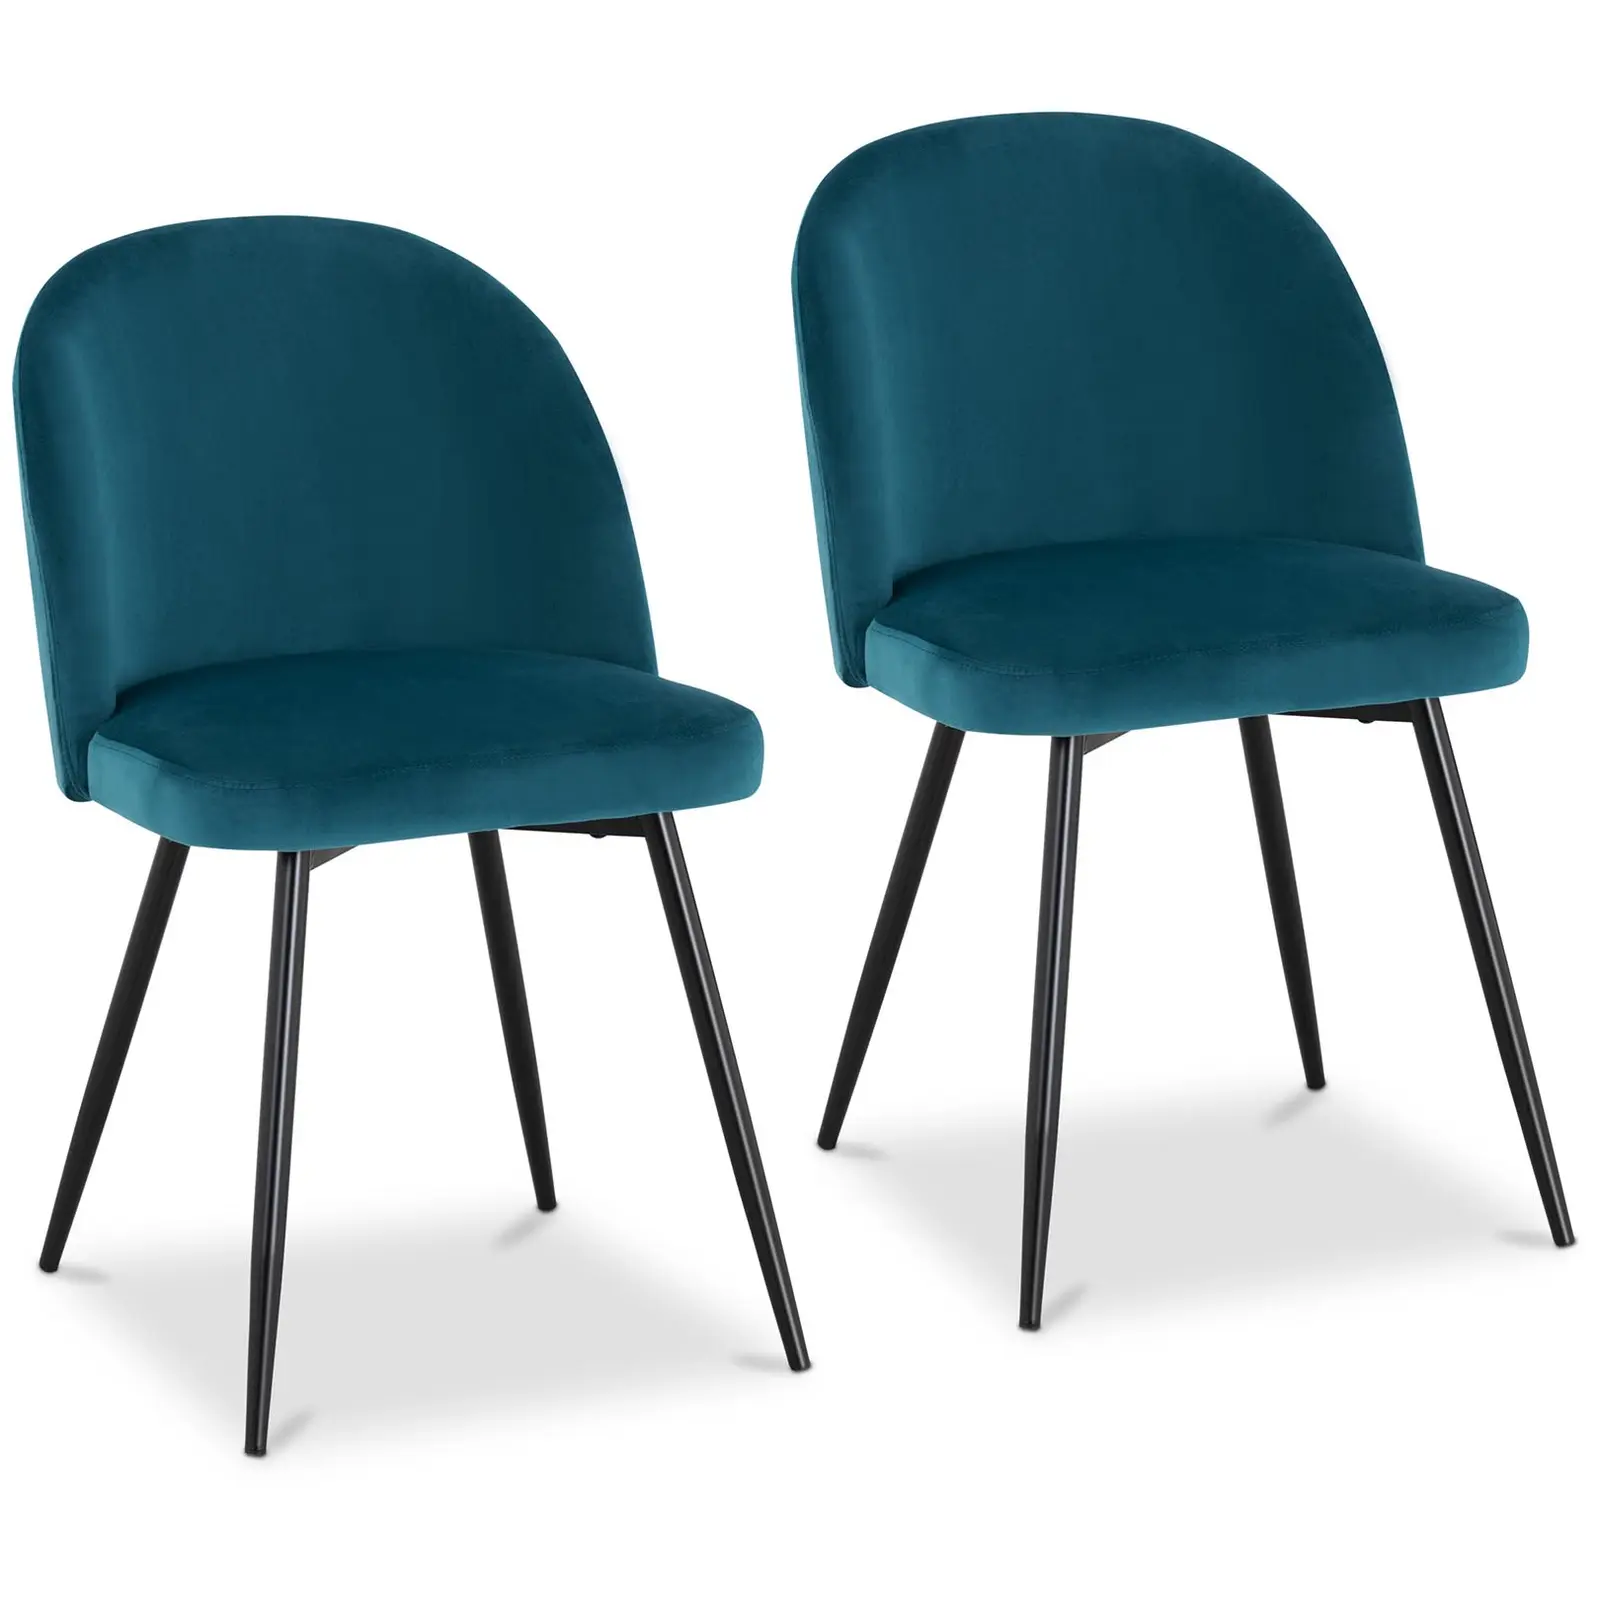 Cadeira estofada - azul-turquesa - aveludada - 2 un.